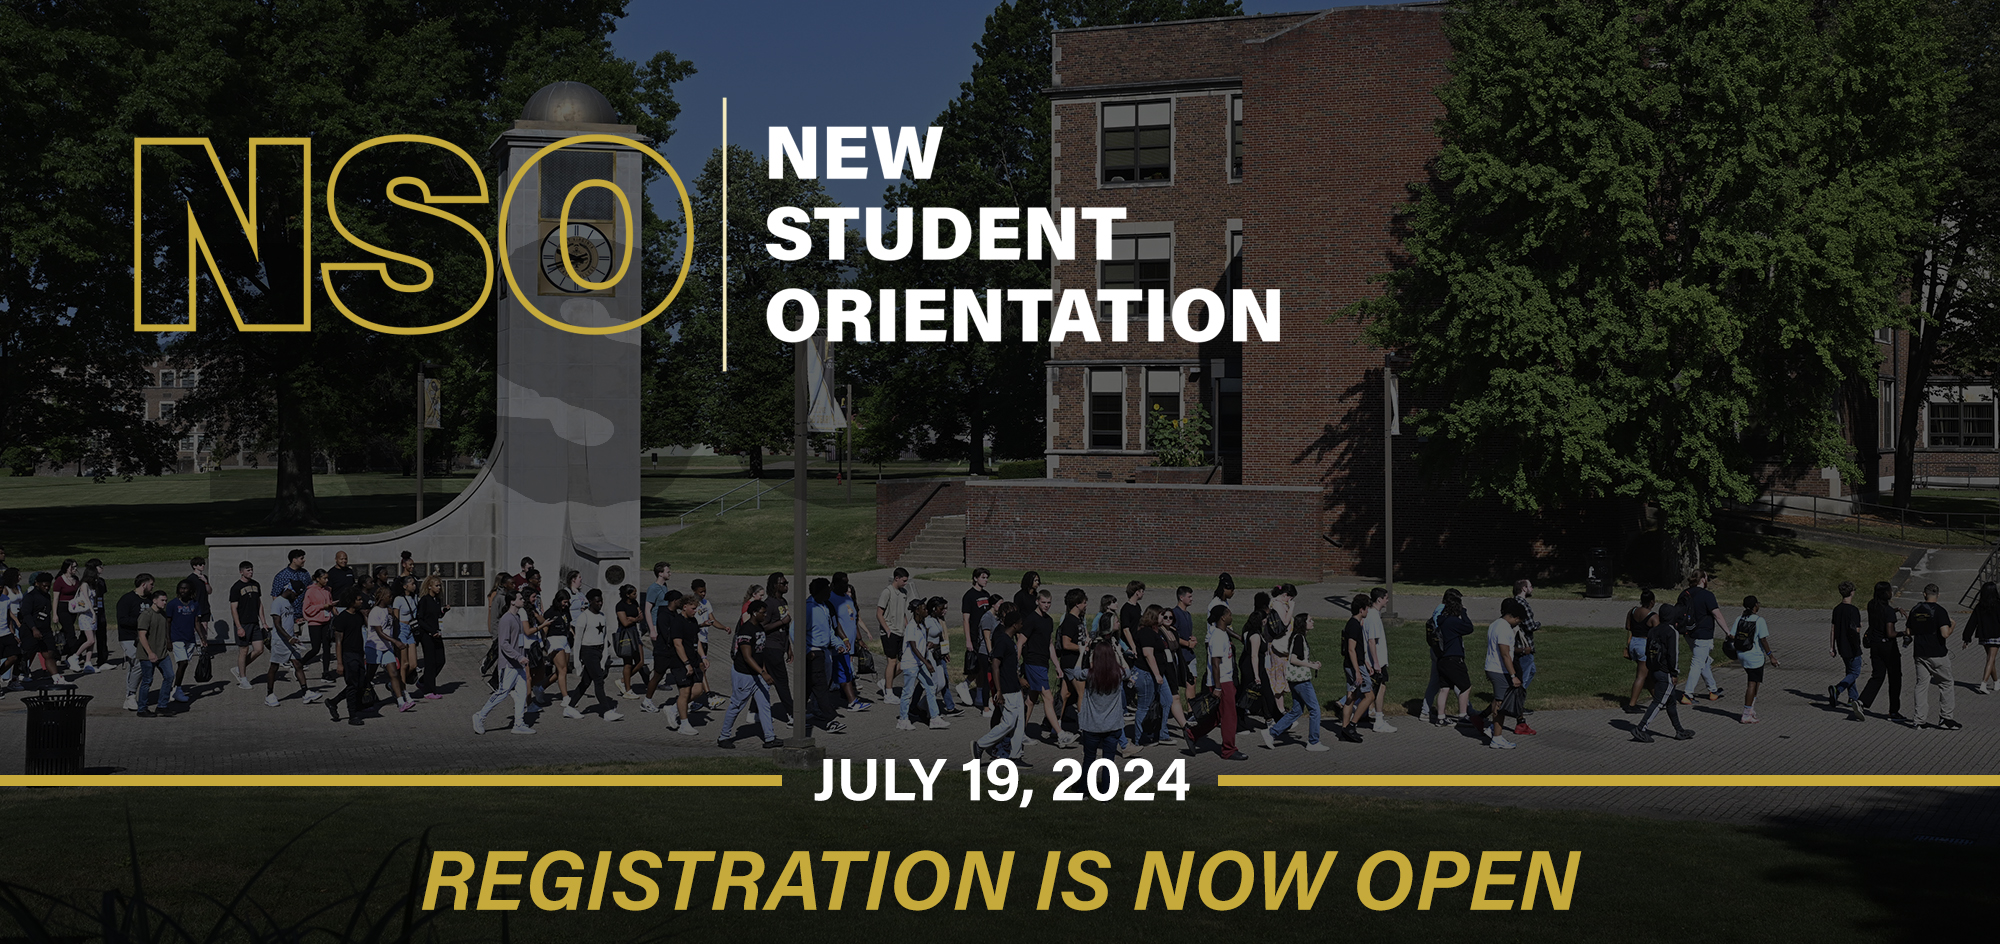 New Student Orientation July 19, 2024